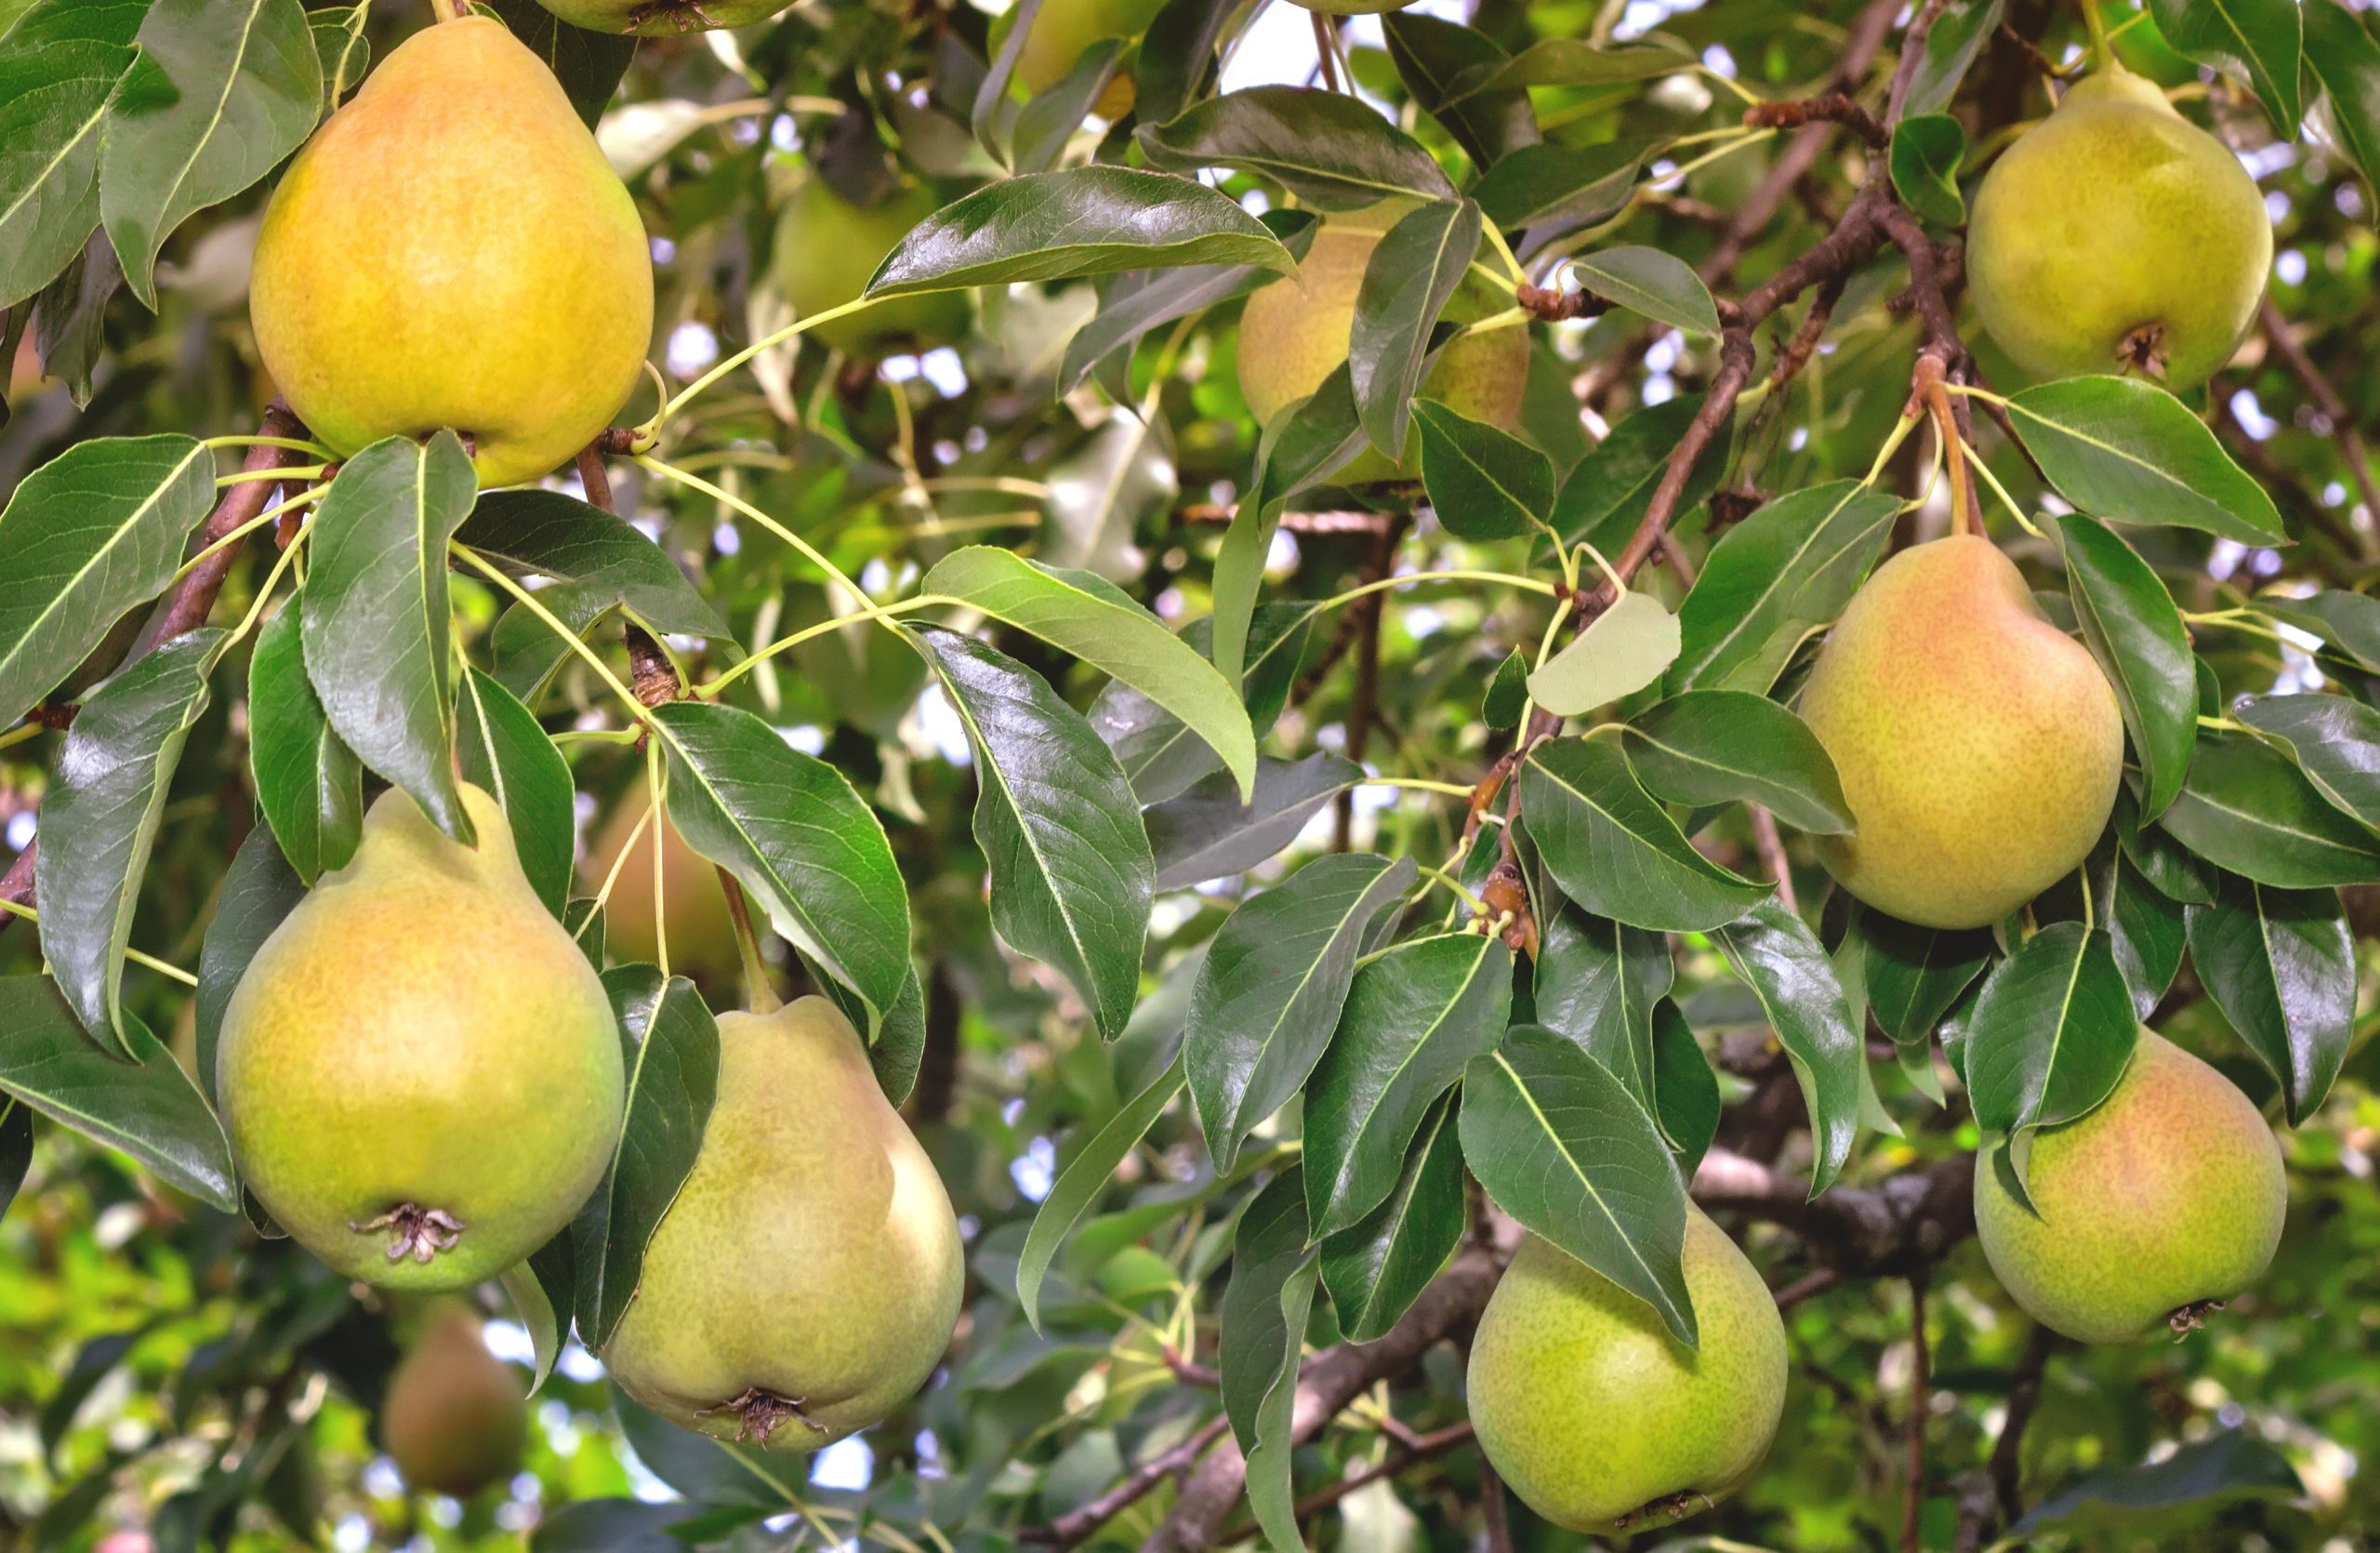 Three large ripe pears hanging on the tree.